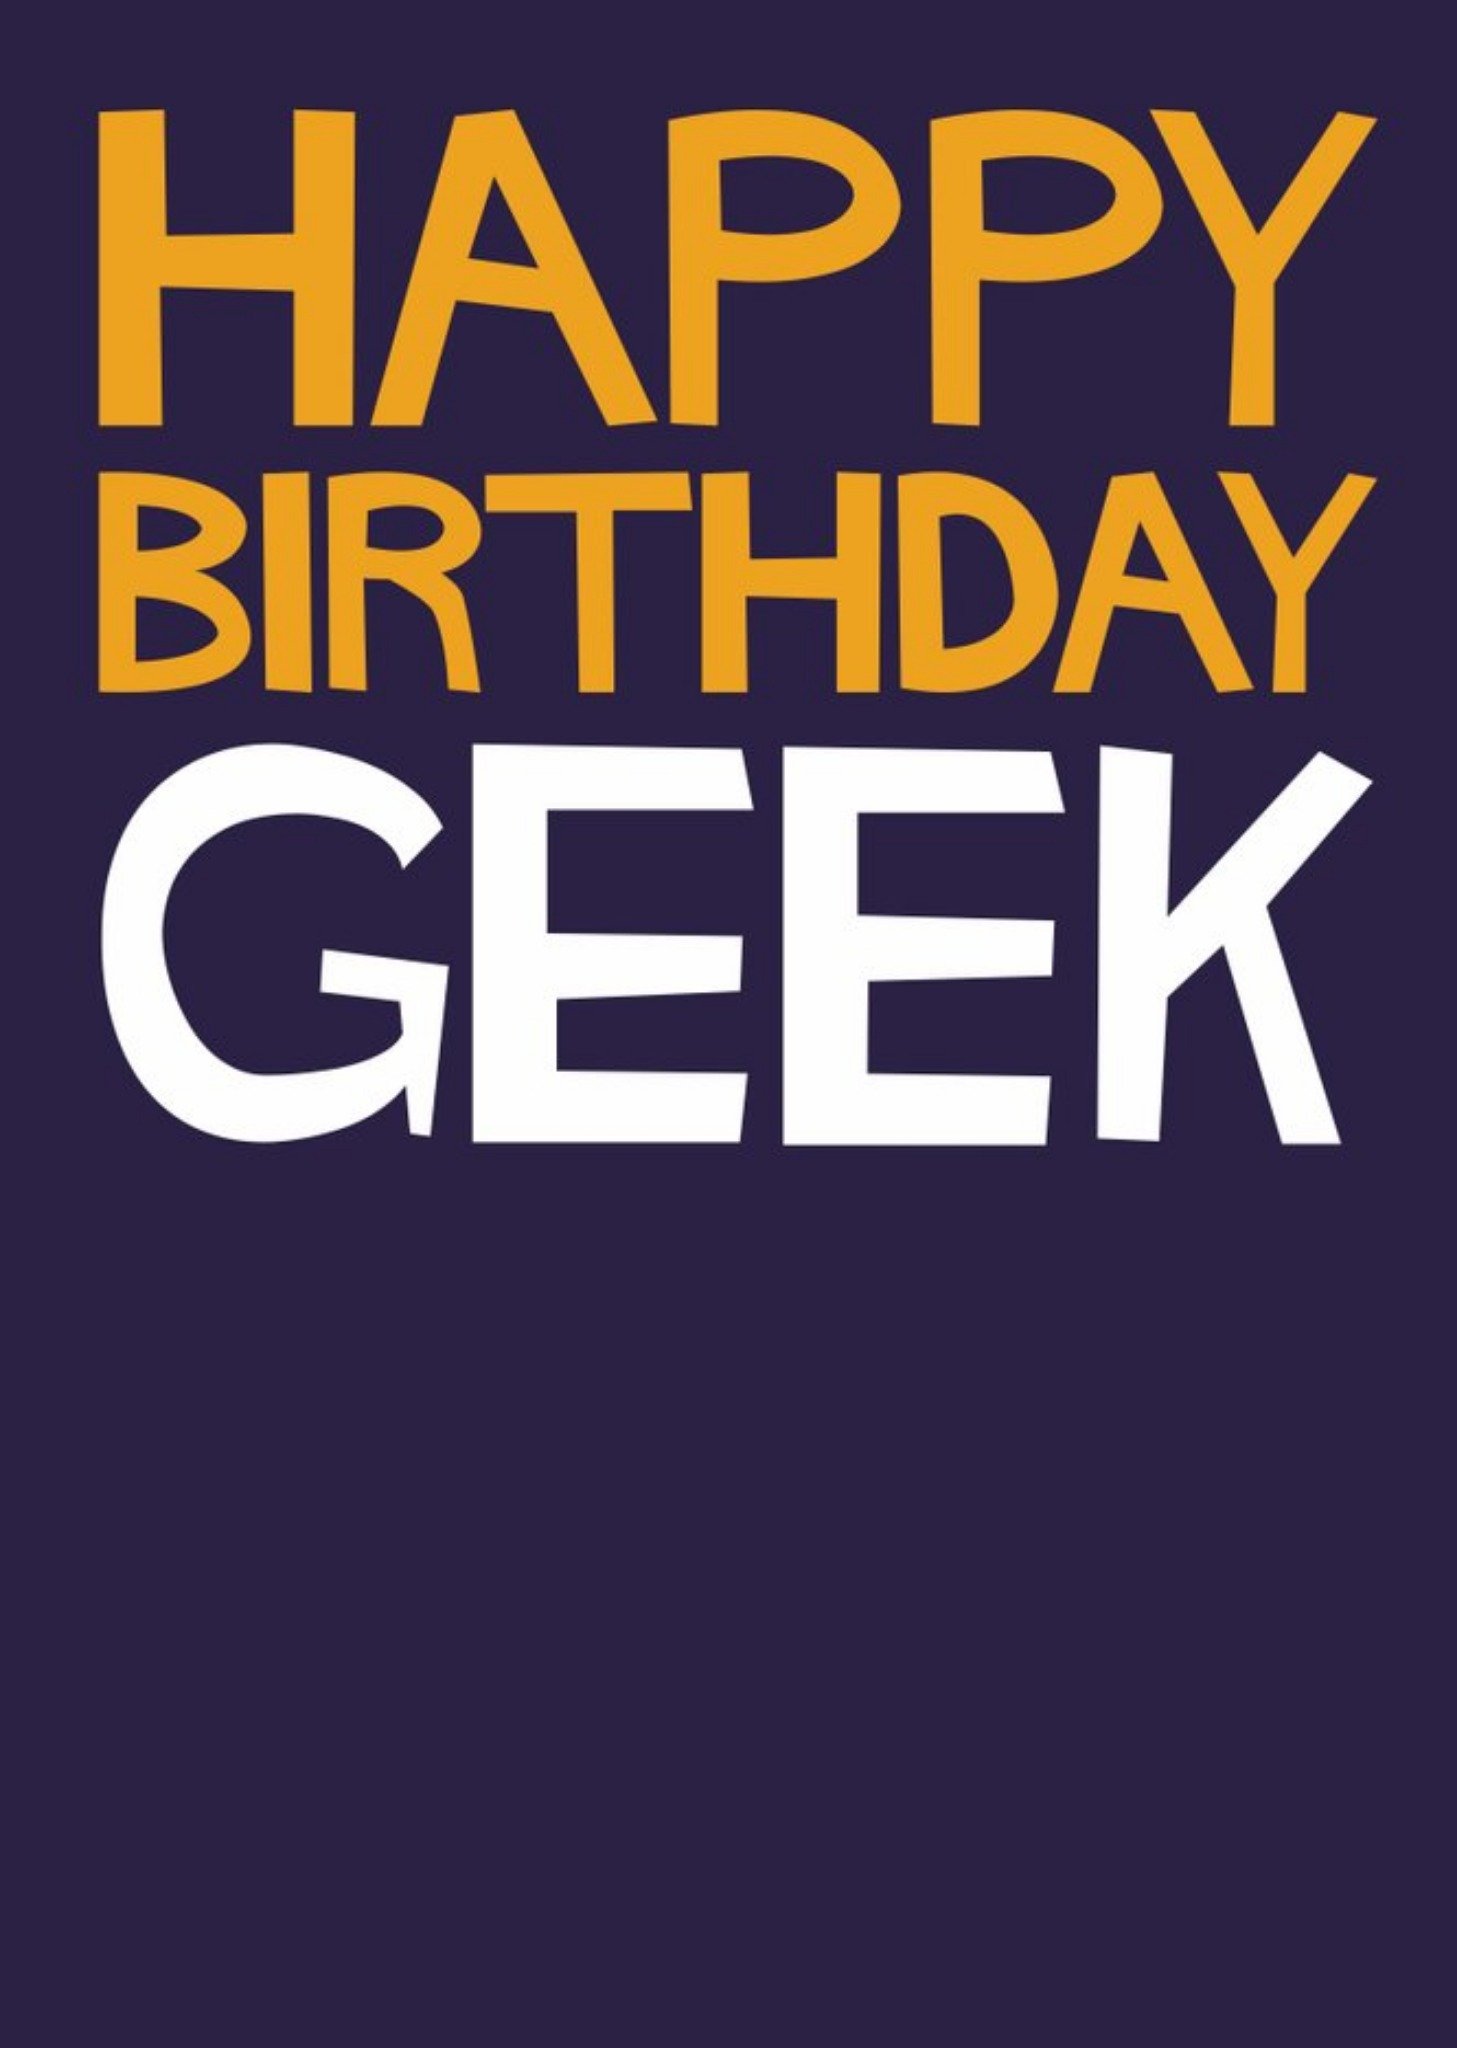 Moonpig Typographic Funny Happy Birthday Geek Card, Large